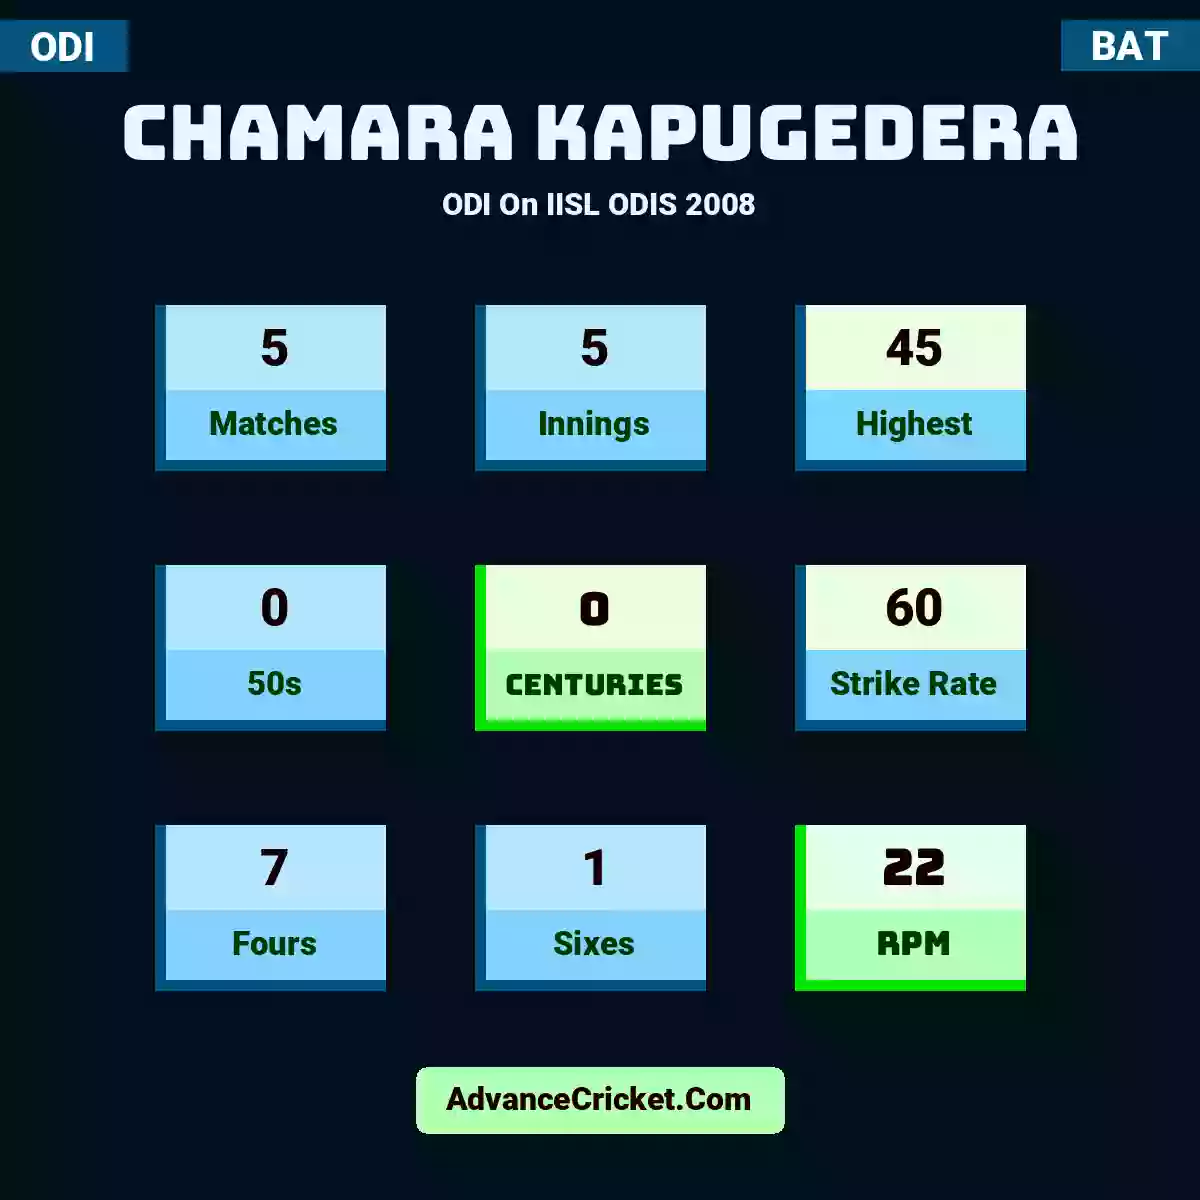 Chamara Kapugedera ODI  On IISL ODIS 2008, Chamara Kapugedera played 5 matches, scored 45 runs as highest, 0 half-centuries, and 0 centuries, with a strike rate of 60. C.Kapugedera hit 7 fours and 1 sixes, with an RPM of 22.